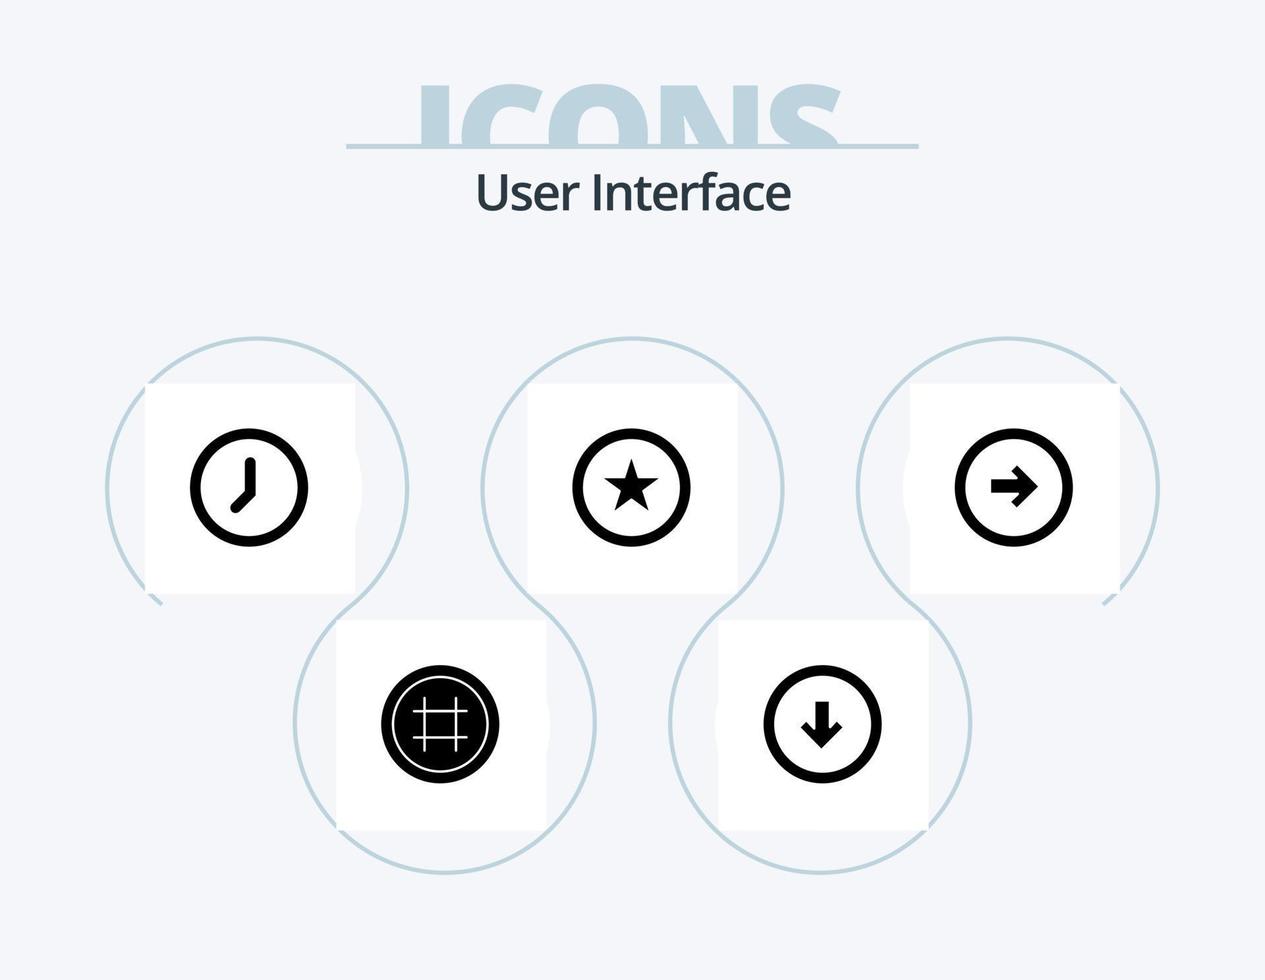 paquete de iconos de glifo de interfaz de usuario 5 diseño de iconos. botón. usuario. abajo. interfaz. usuario vector